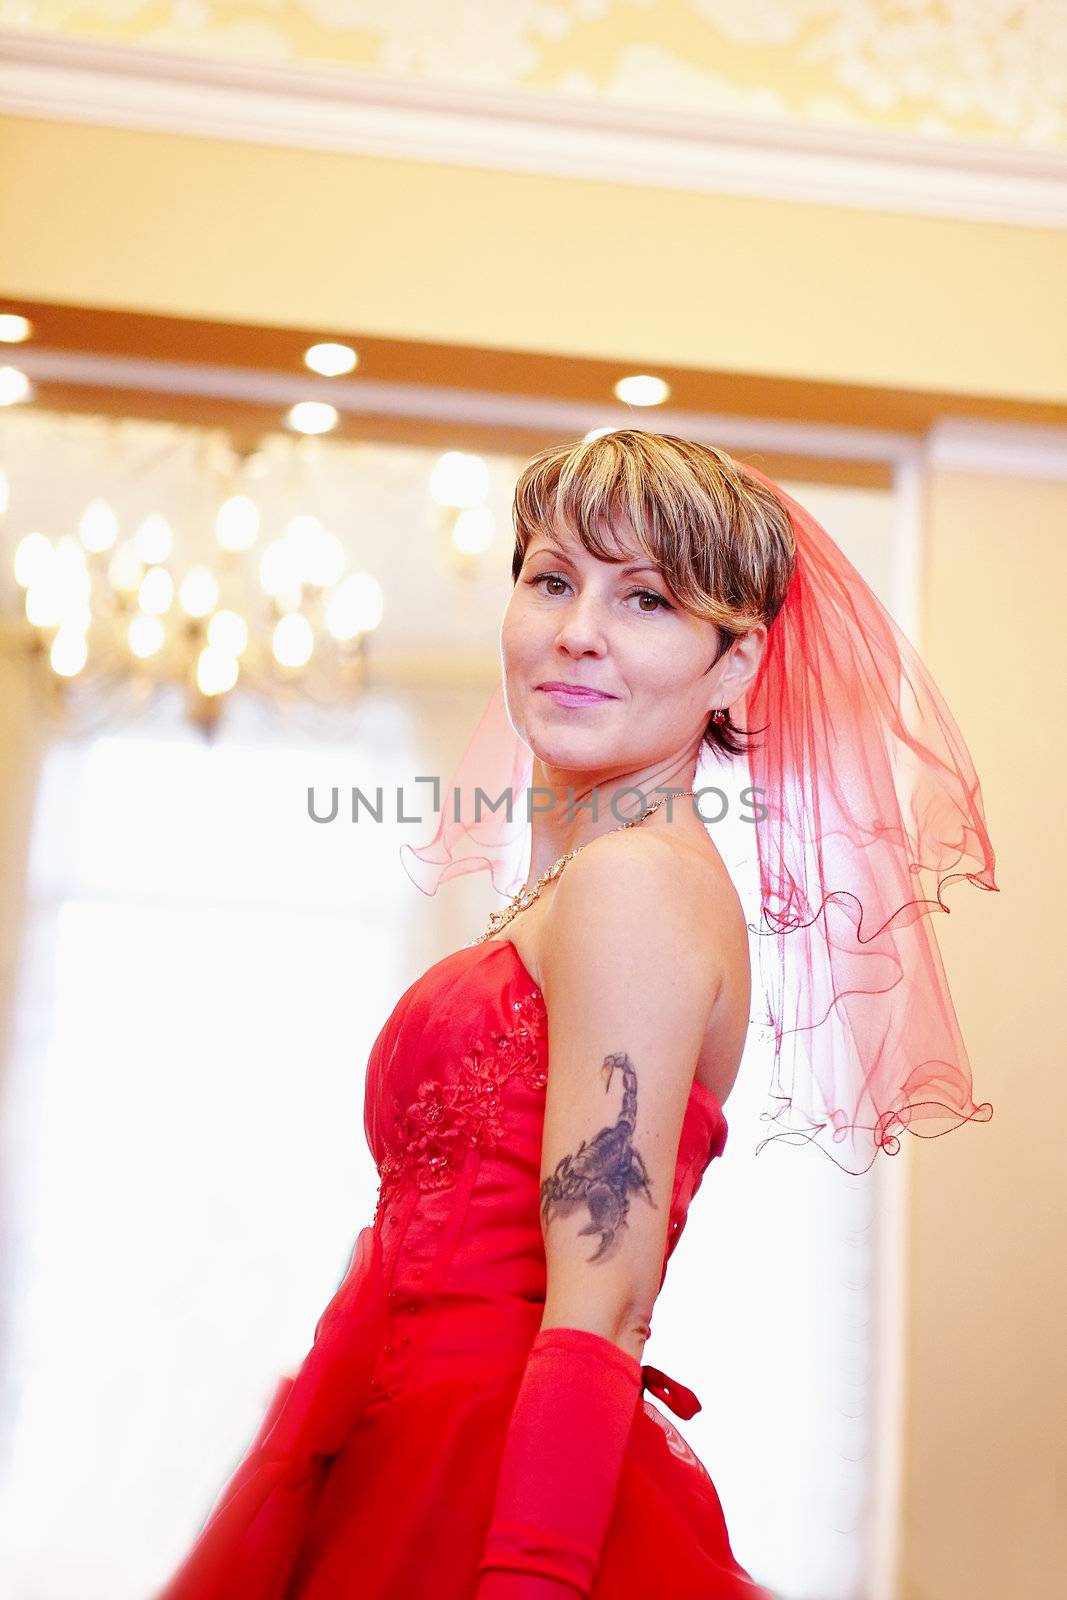 The beautiful bride in a red dress by Azaliya